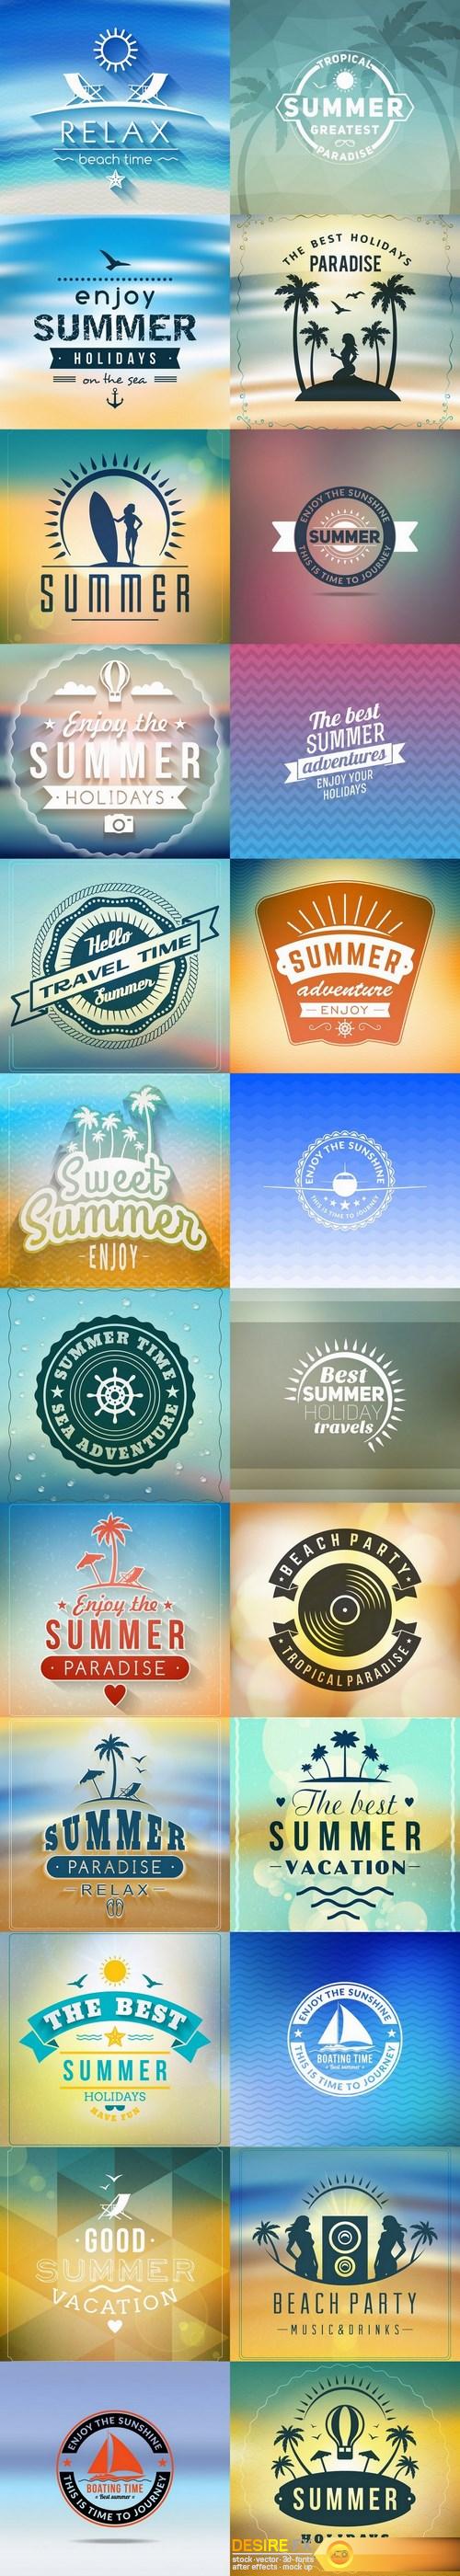 Summer Holidays Blure Background - 25 Vector